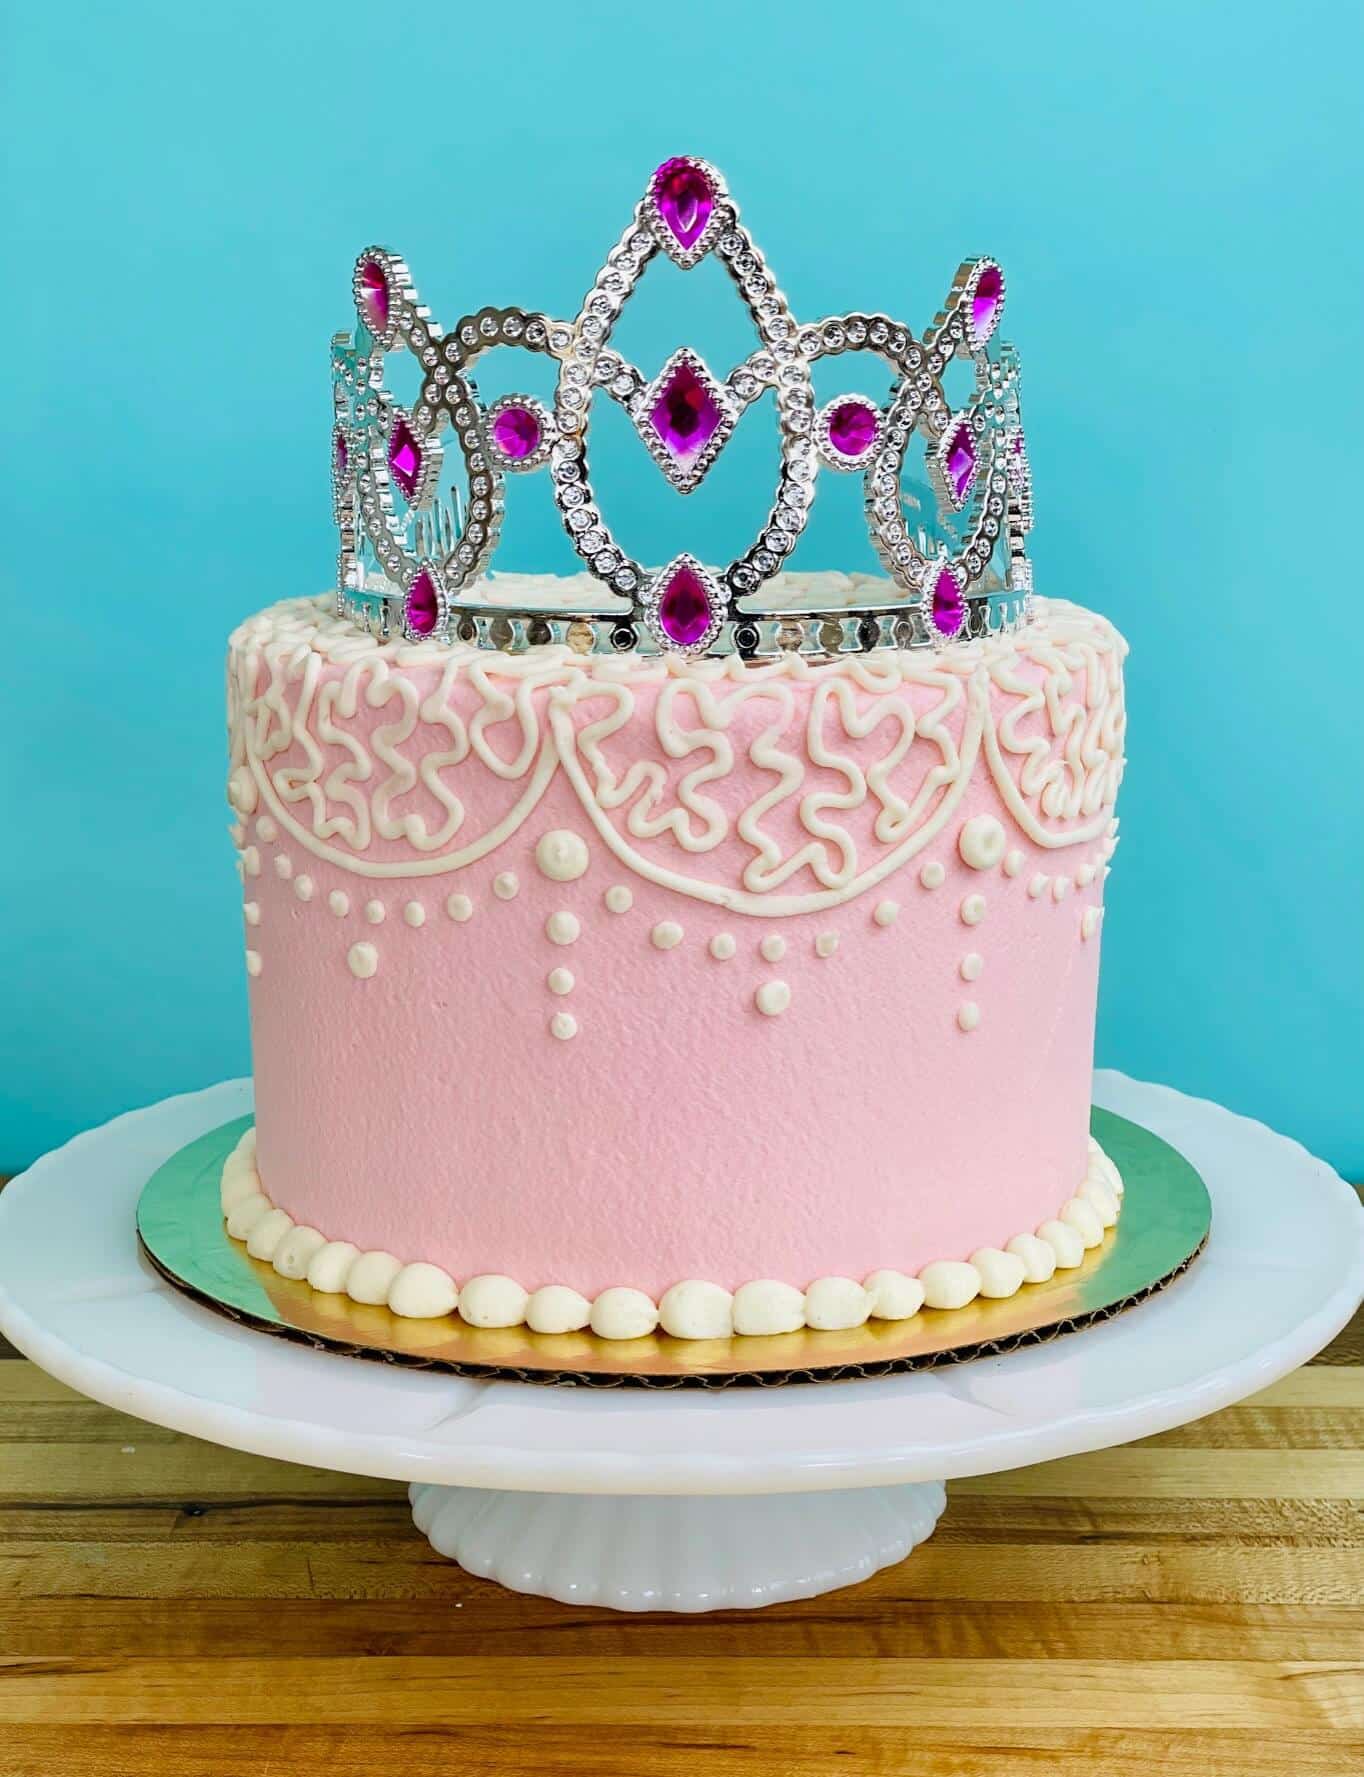 Princess Flower Cake with a Tiara Cake Topper by Amycakes Bakes